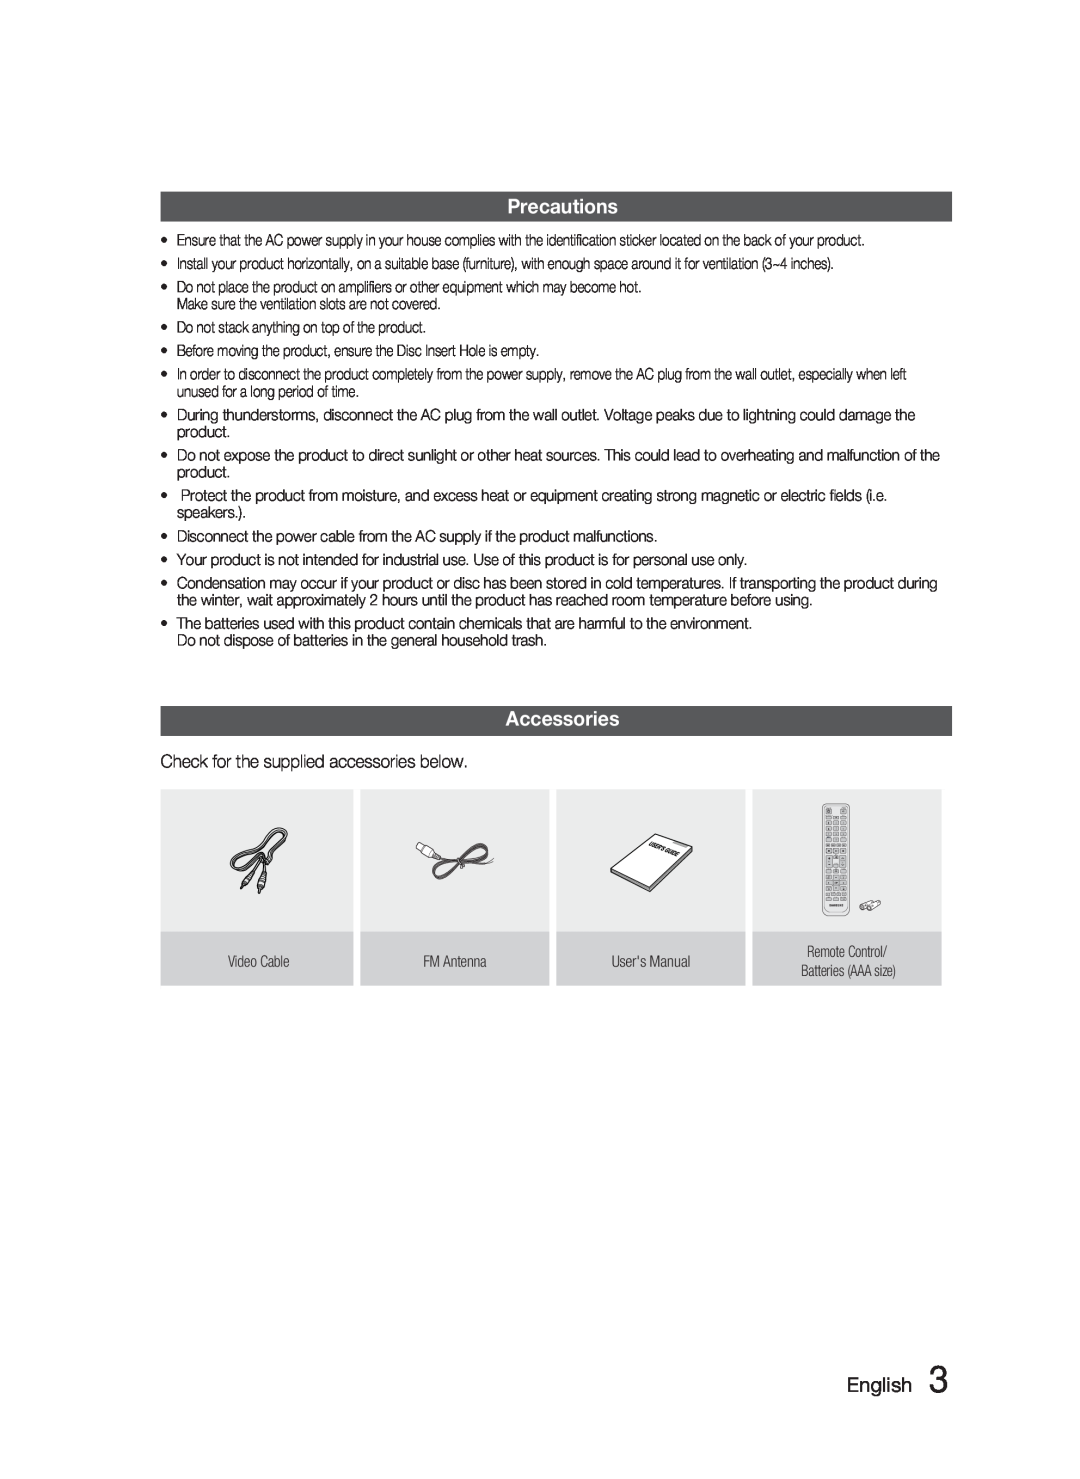 Samsung HT-C463-XAC, AH68-02259Q user manual Precautions, Accessories, English 